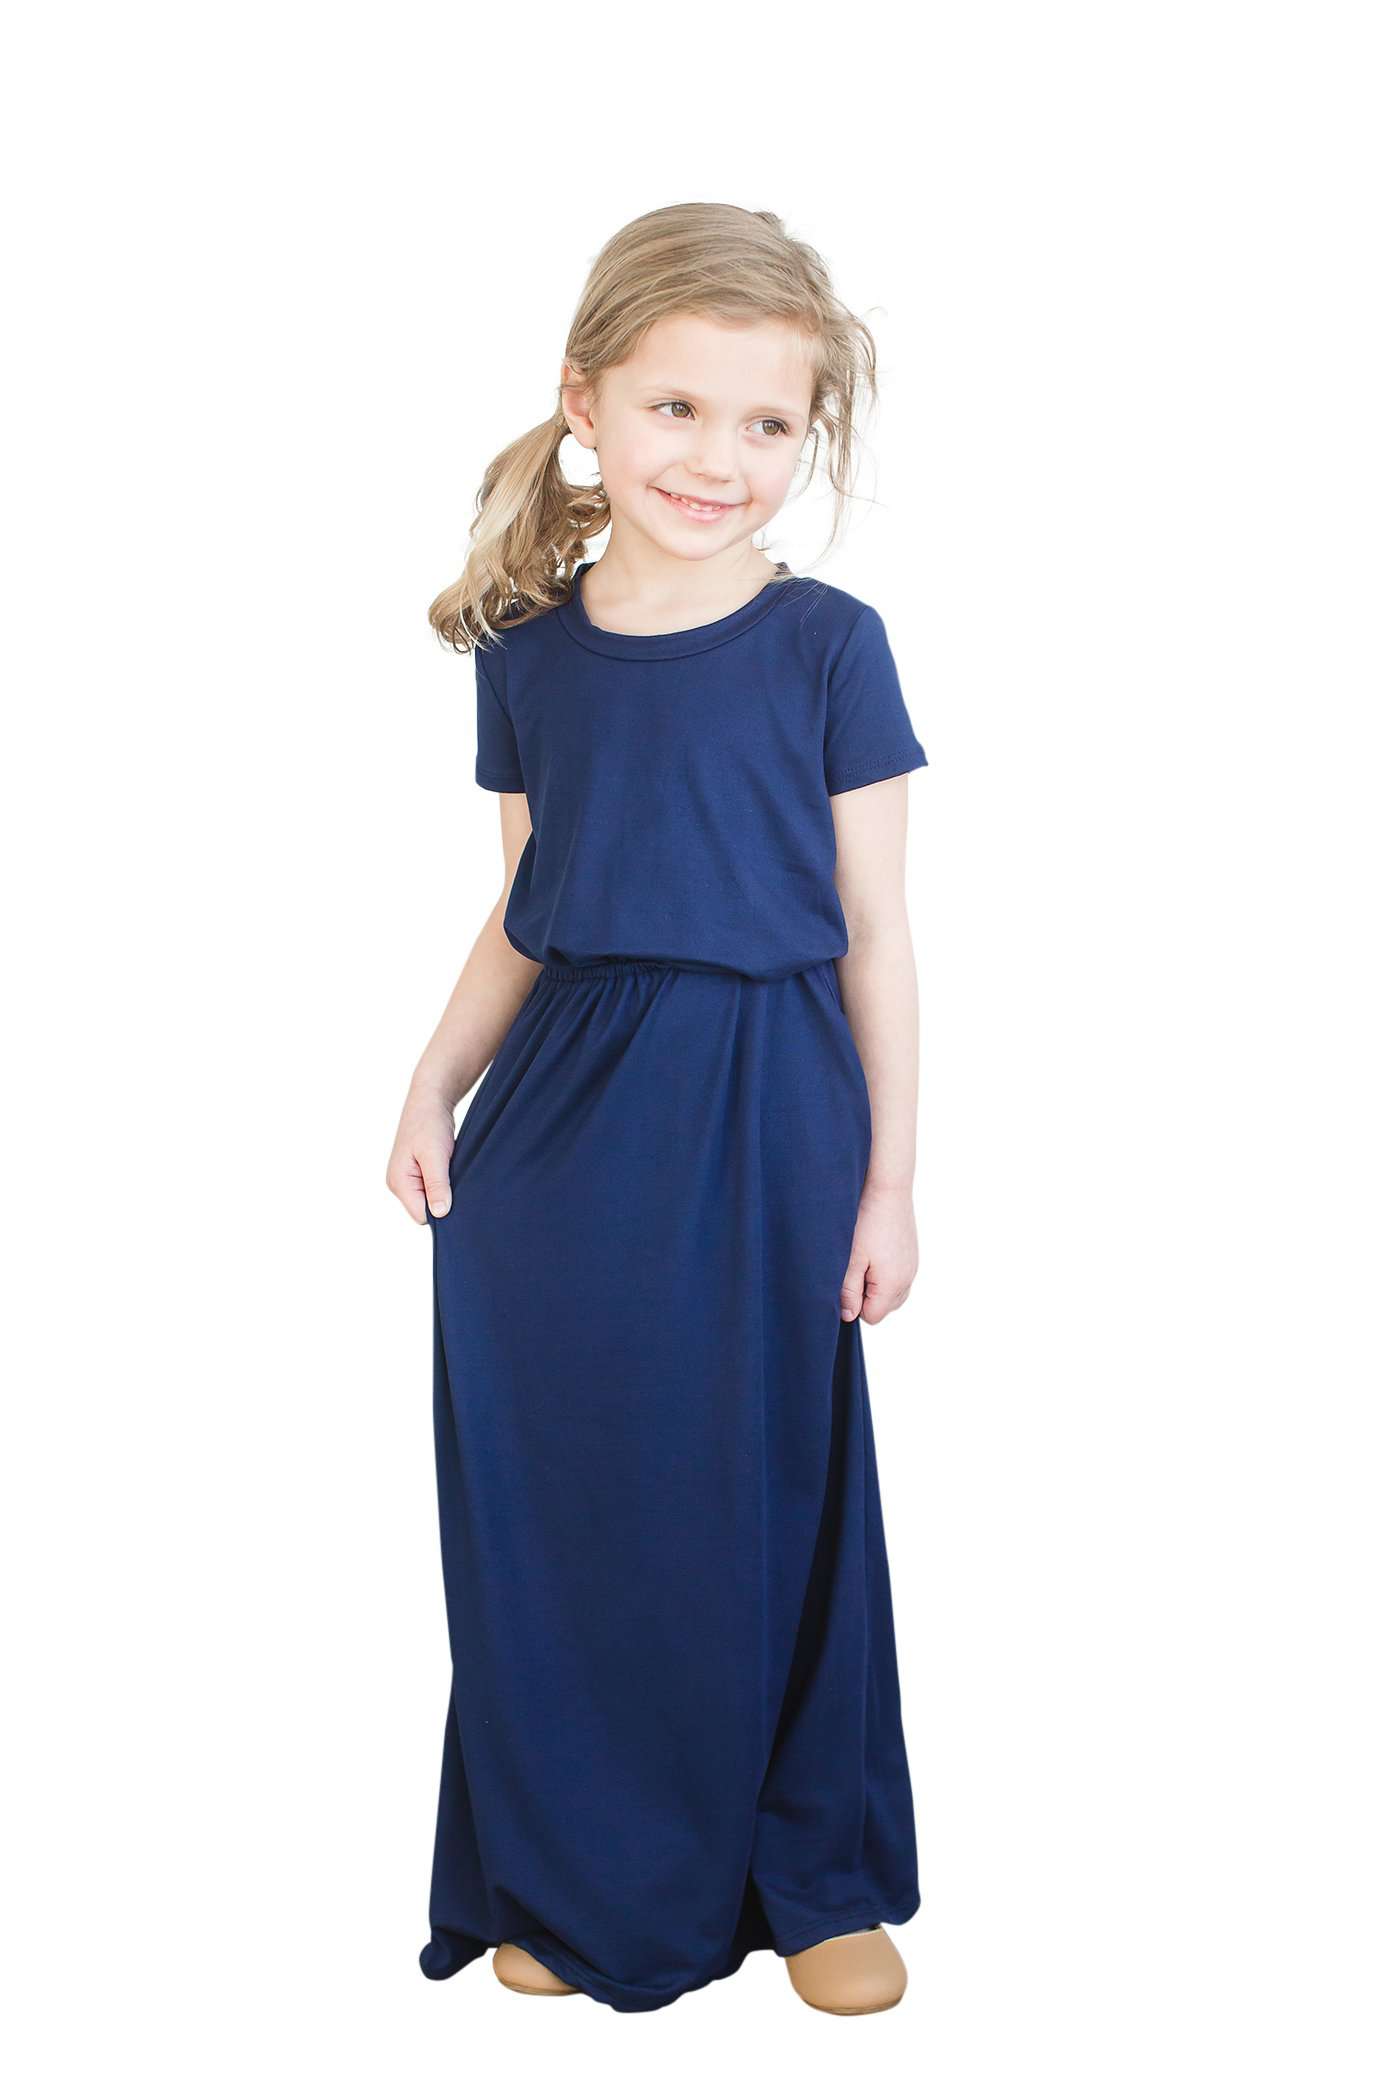 Modest girl's maxi dress in peach, navy or black. 2 hidden side seam pockets, elastic waist and short sleeves.